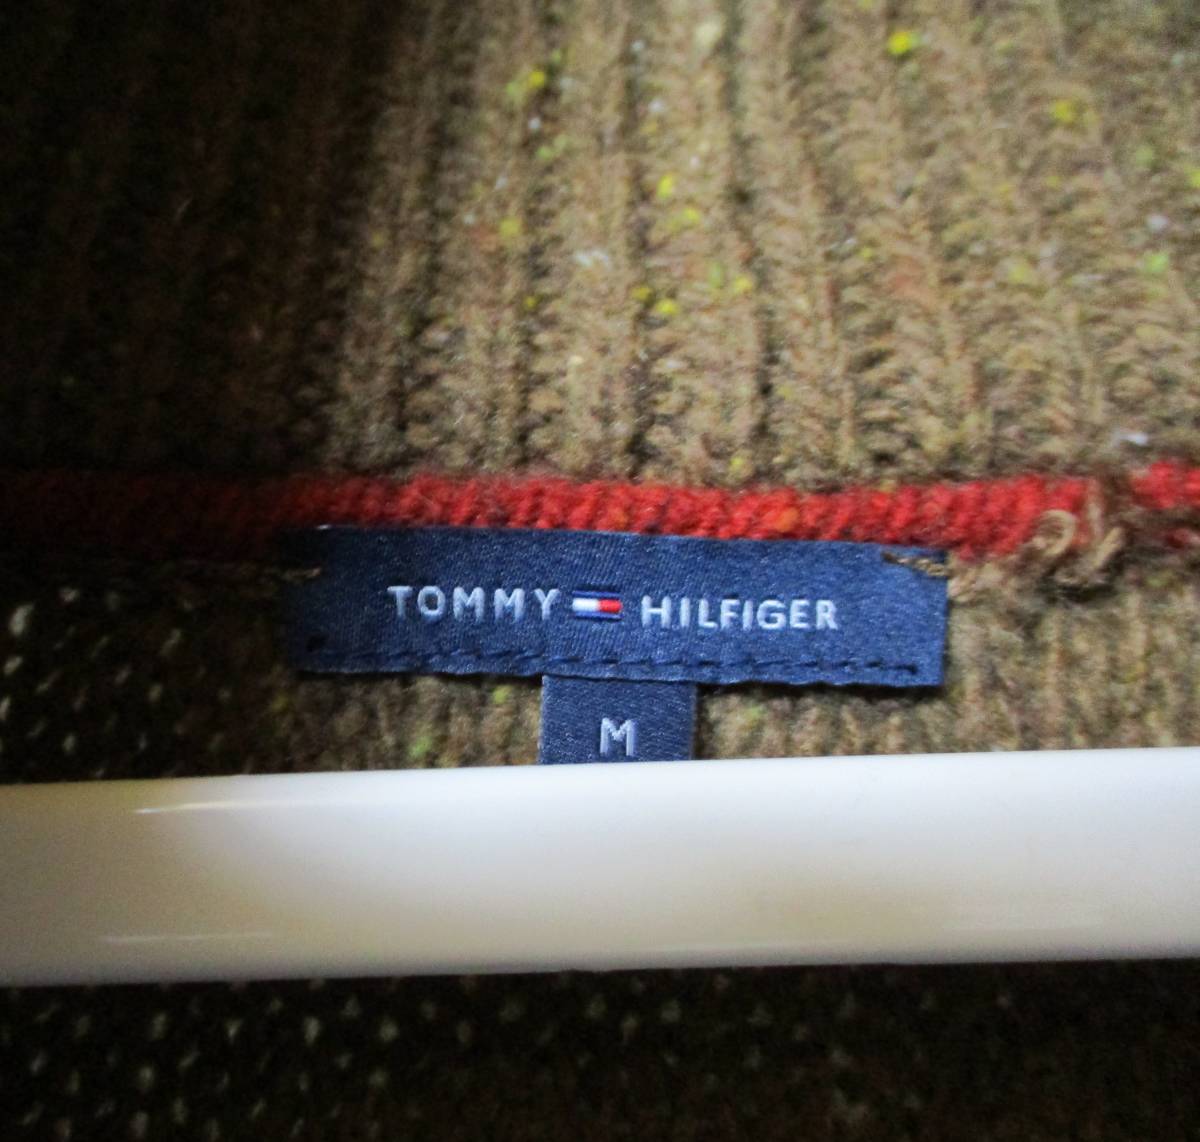  HILFGER トミー トミーヒルフィガー コレクション デザイン ジャケット 羽織 L LX 新品 同様 未使用 試着程度 ブラウン サイズ詳細有_サイズ M 美品